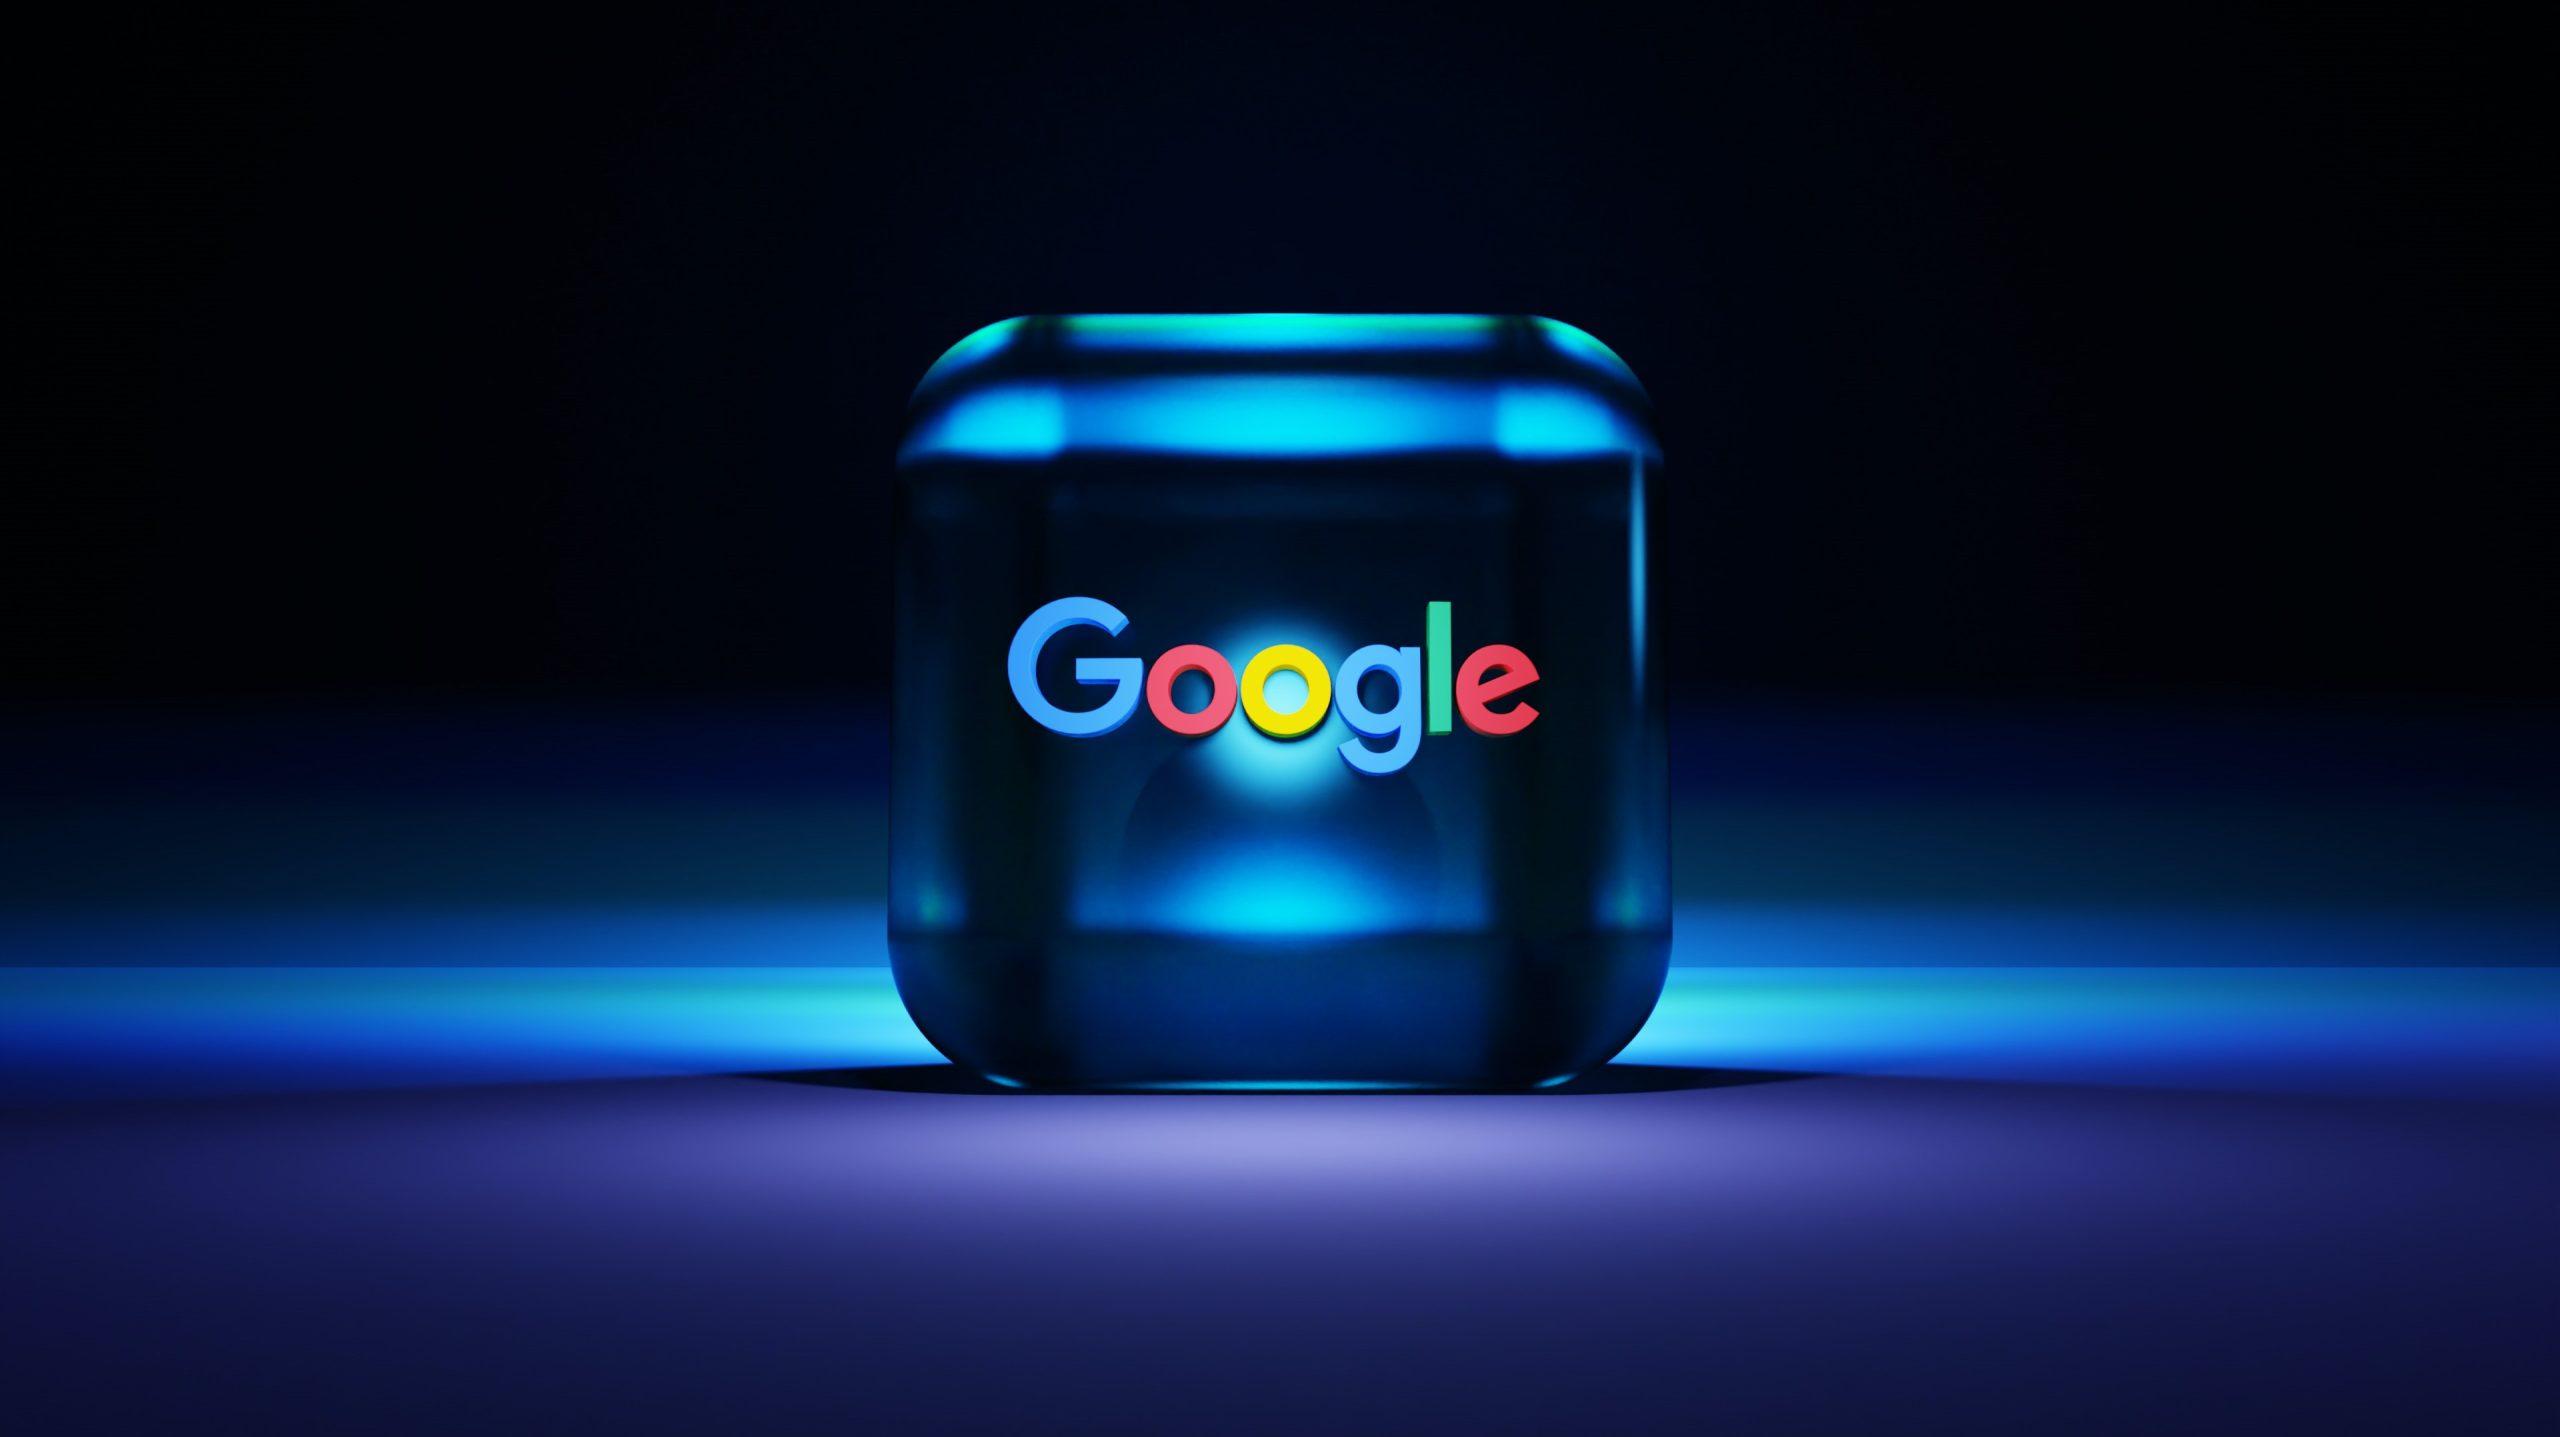 Google logo on a cube-shaped object.